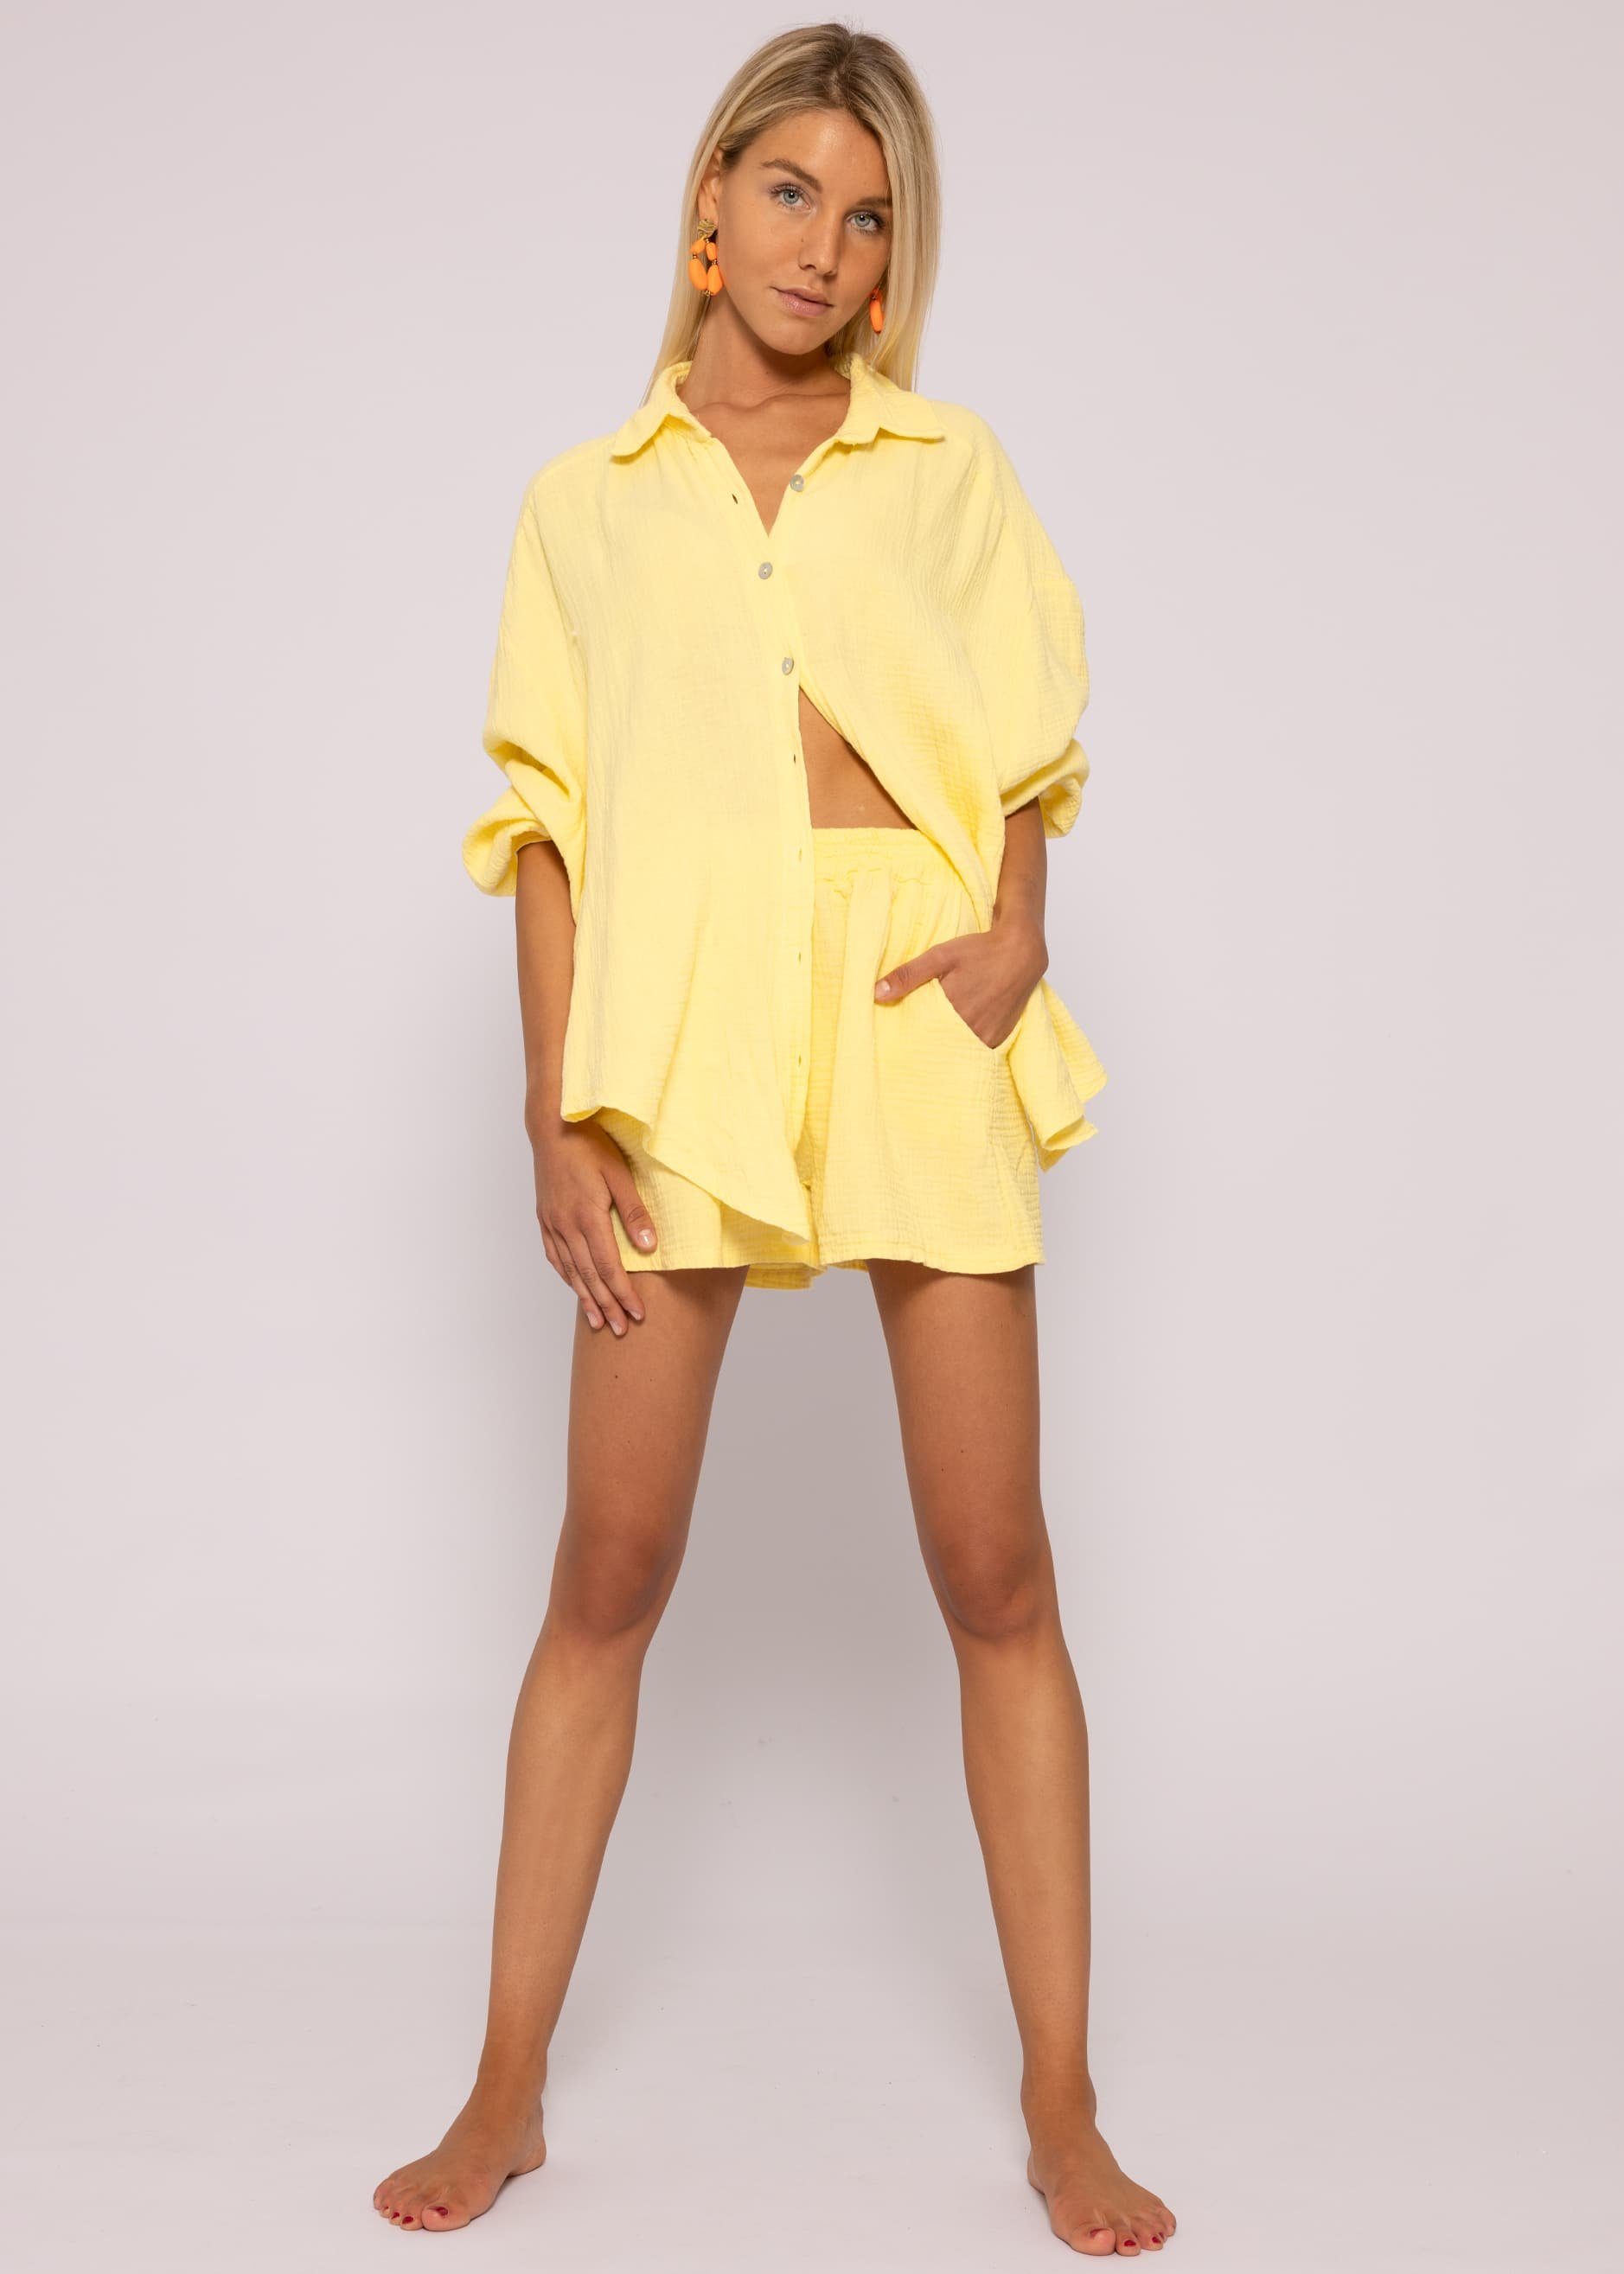 (Musselin), in Italy Shorts Hose Damen Musselin Gelb leicht, Made Baumwolle Sommer atmungsaktiv, % 100 SASSYCLASSY sehr Kurz